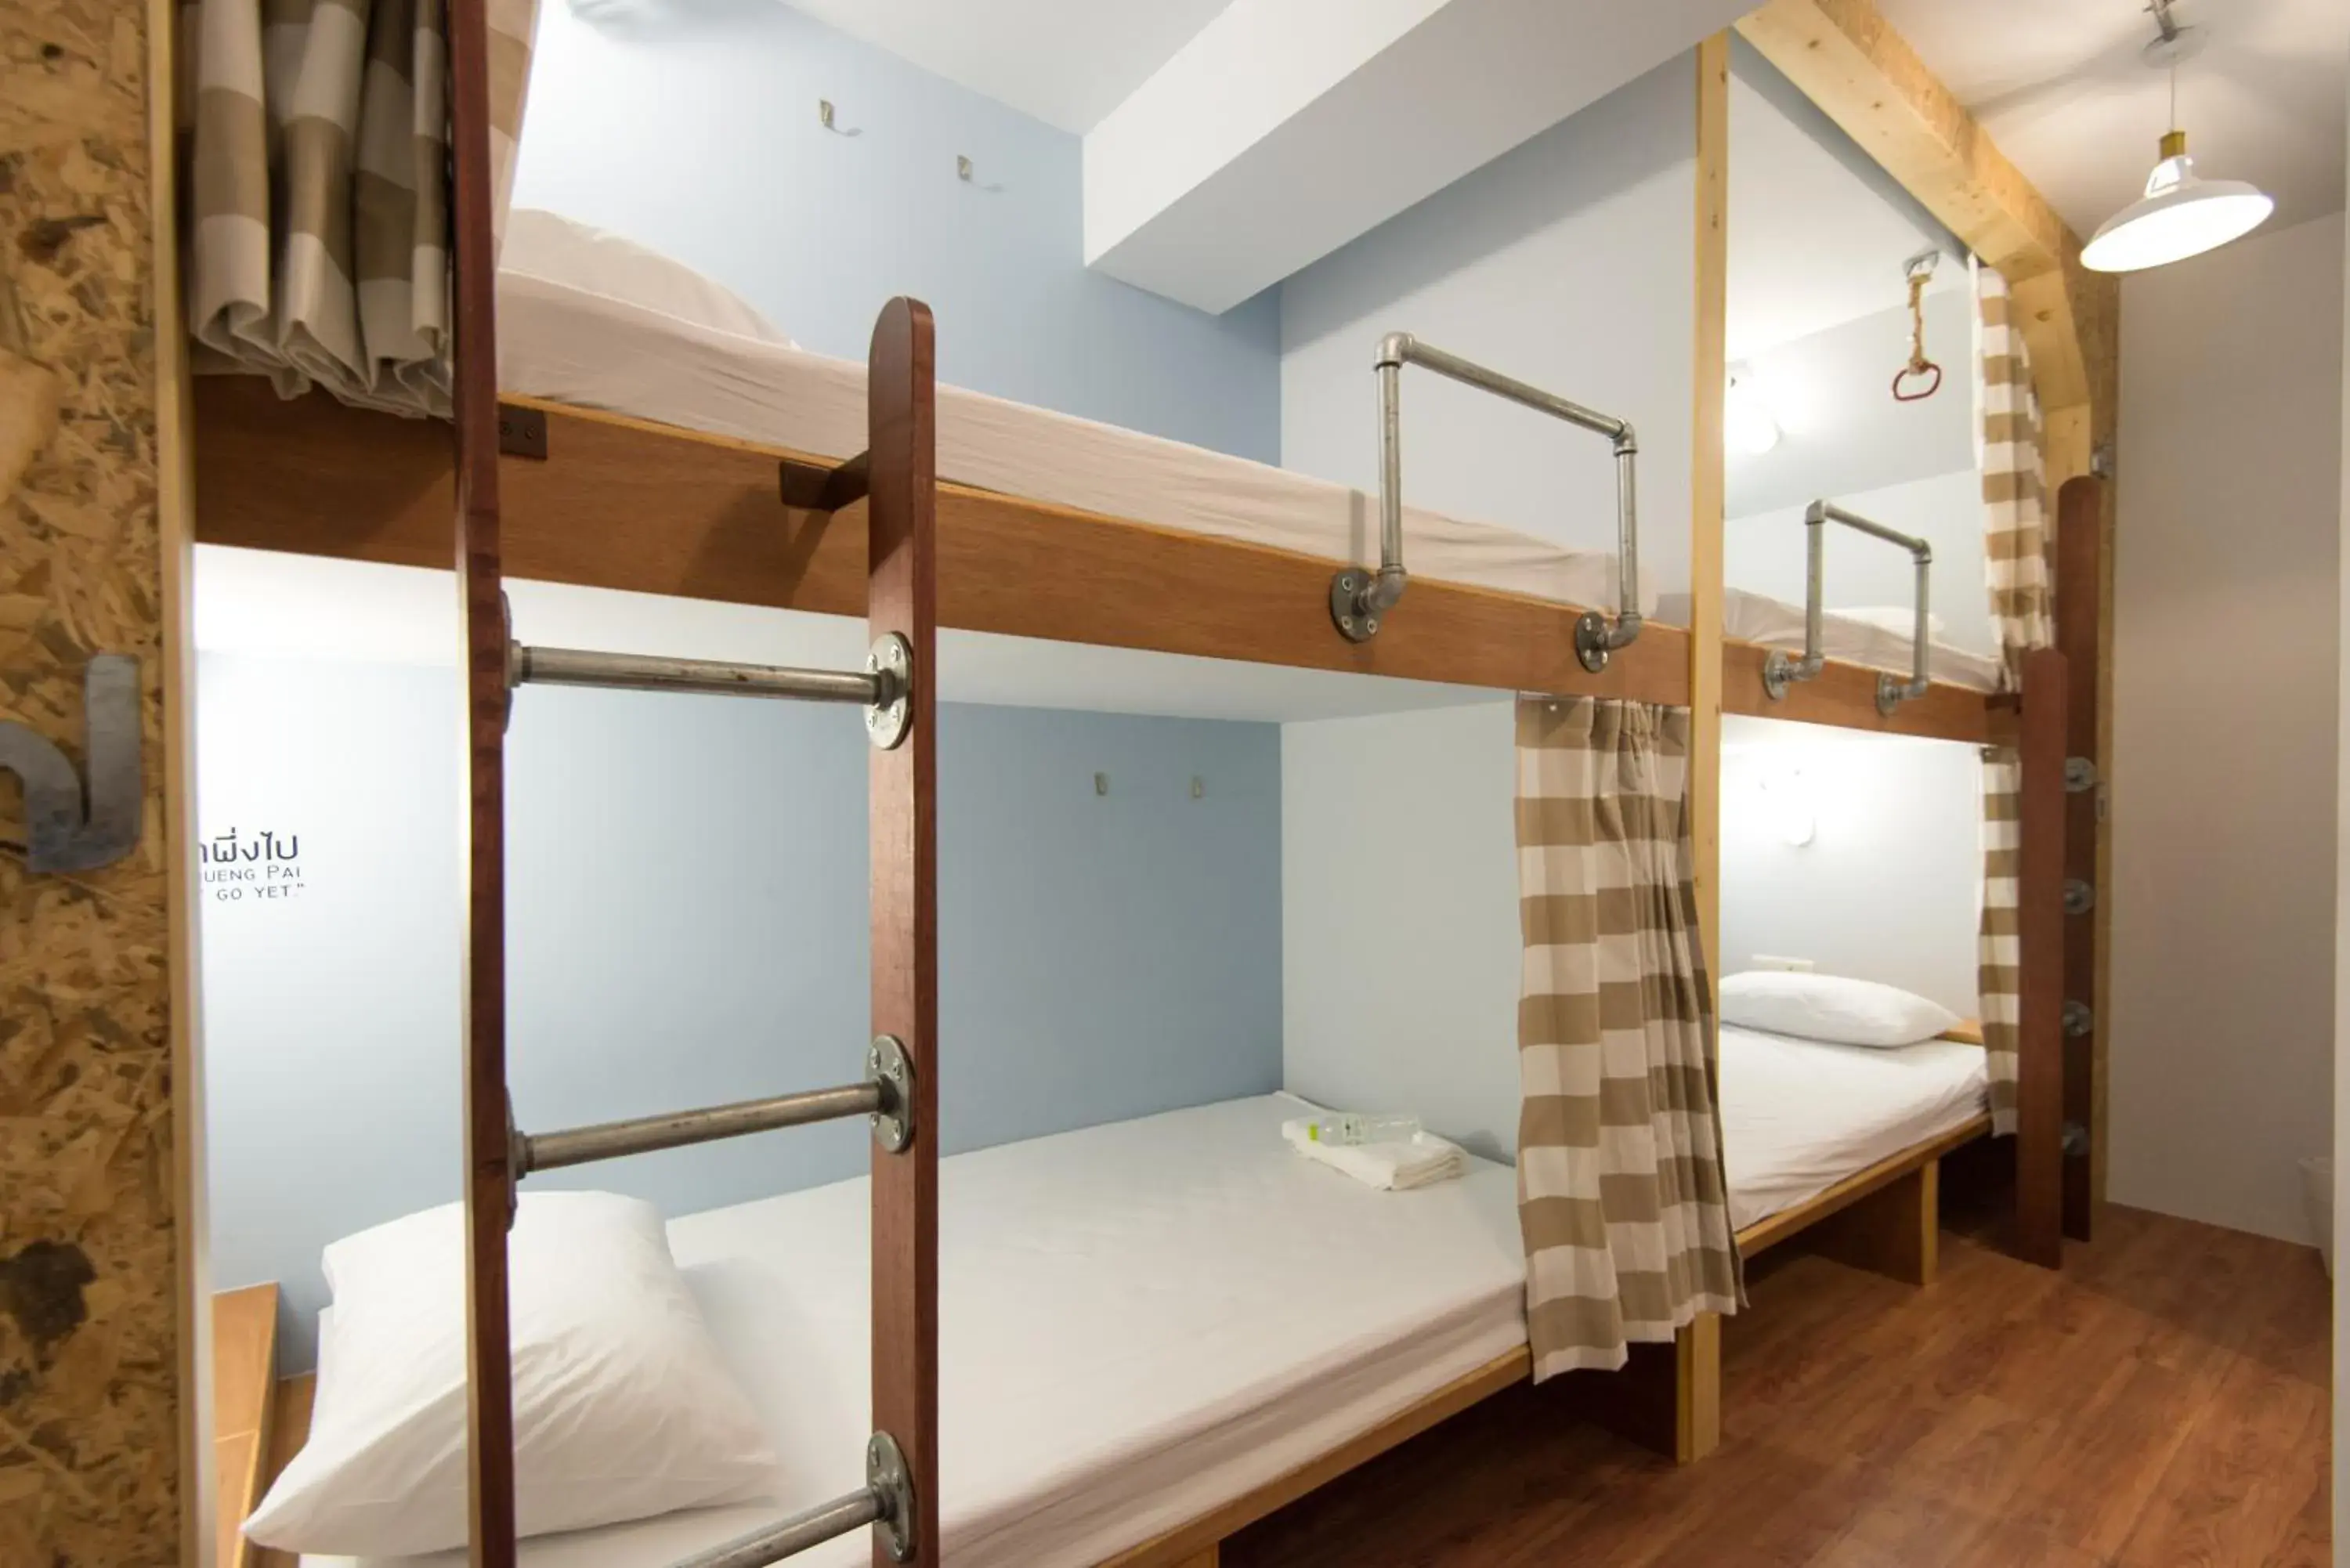 Bedroom, Bunk Bed in Barn & Bed Hostel